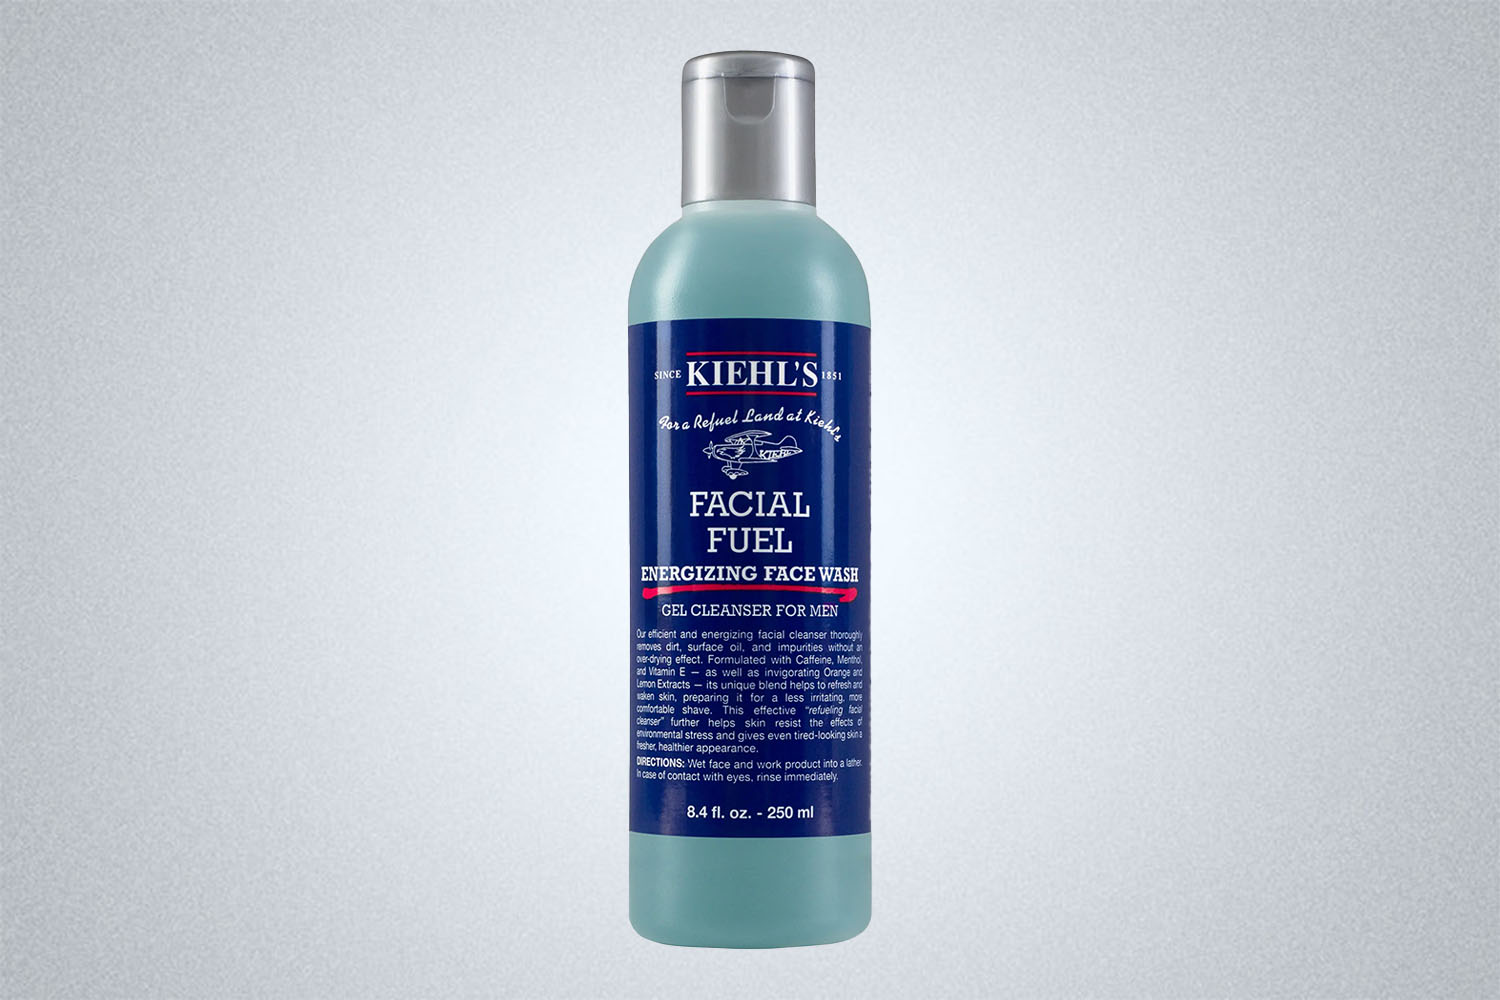 Kiehl’s Facial Fuel Energizing Face Wash